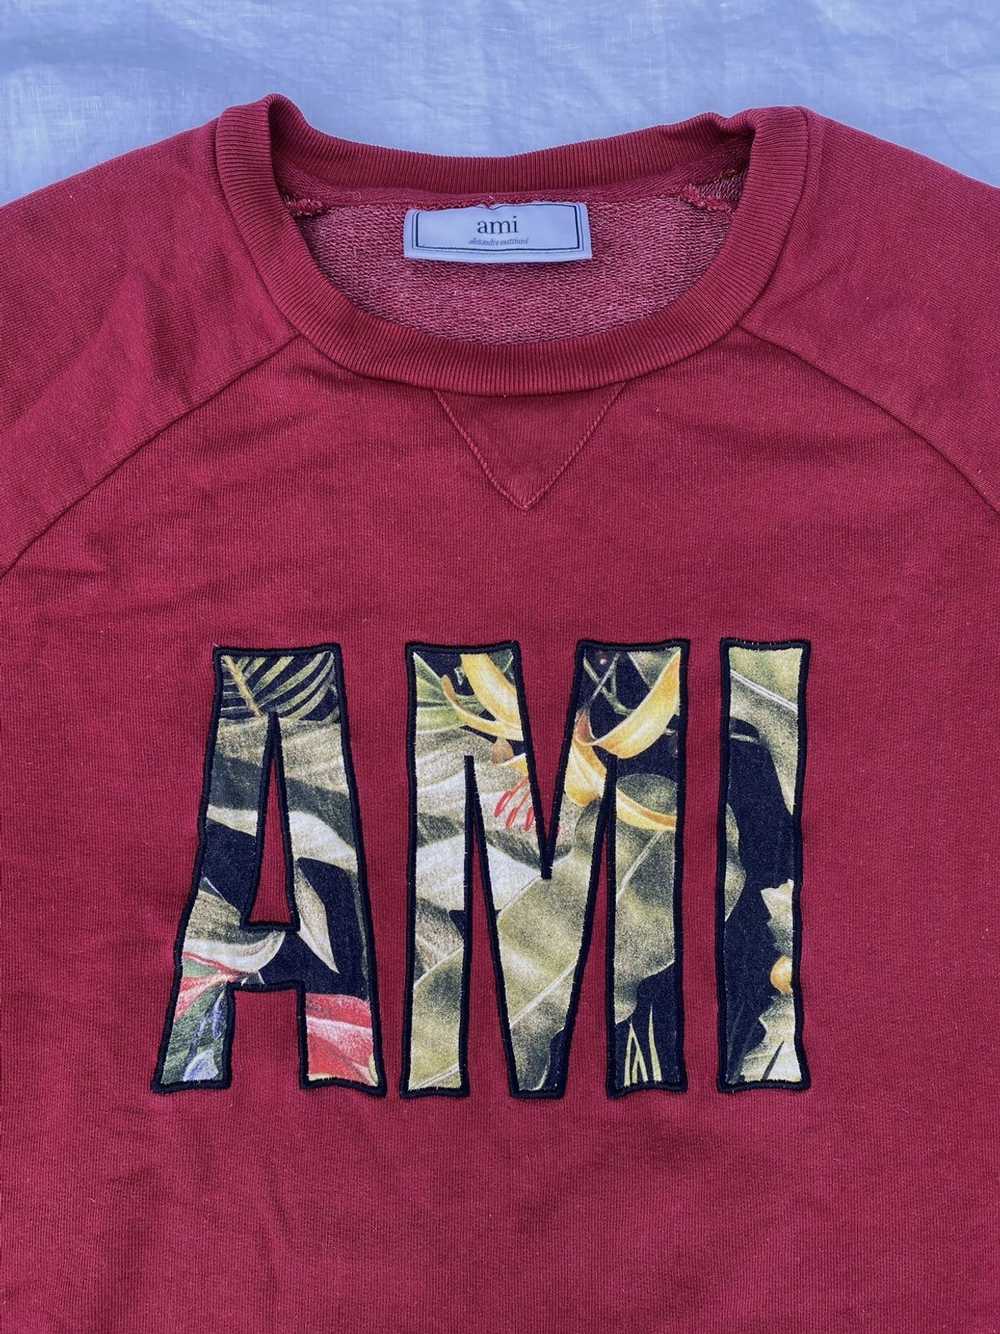 AMI Ami tropical sweatshirt - image 3